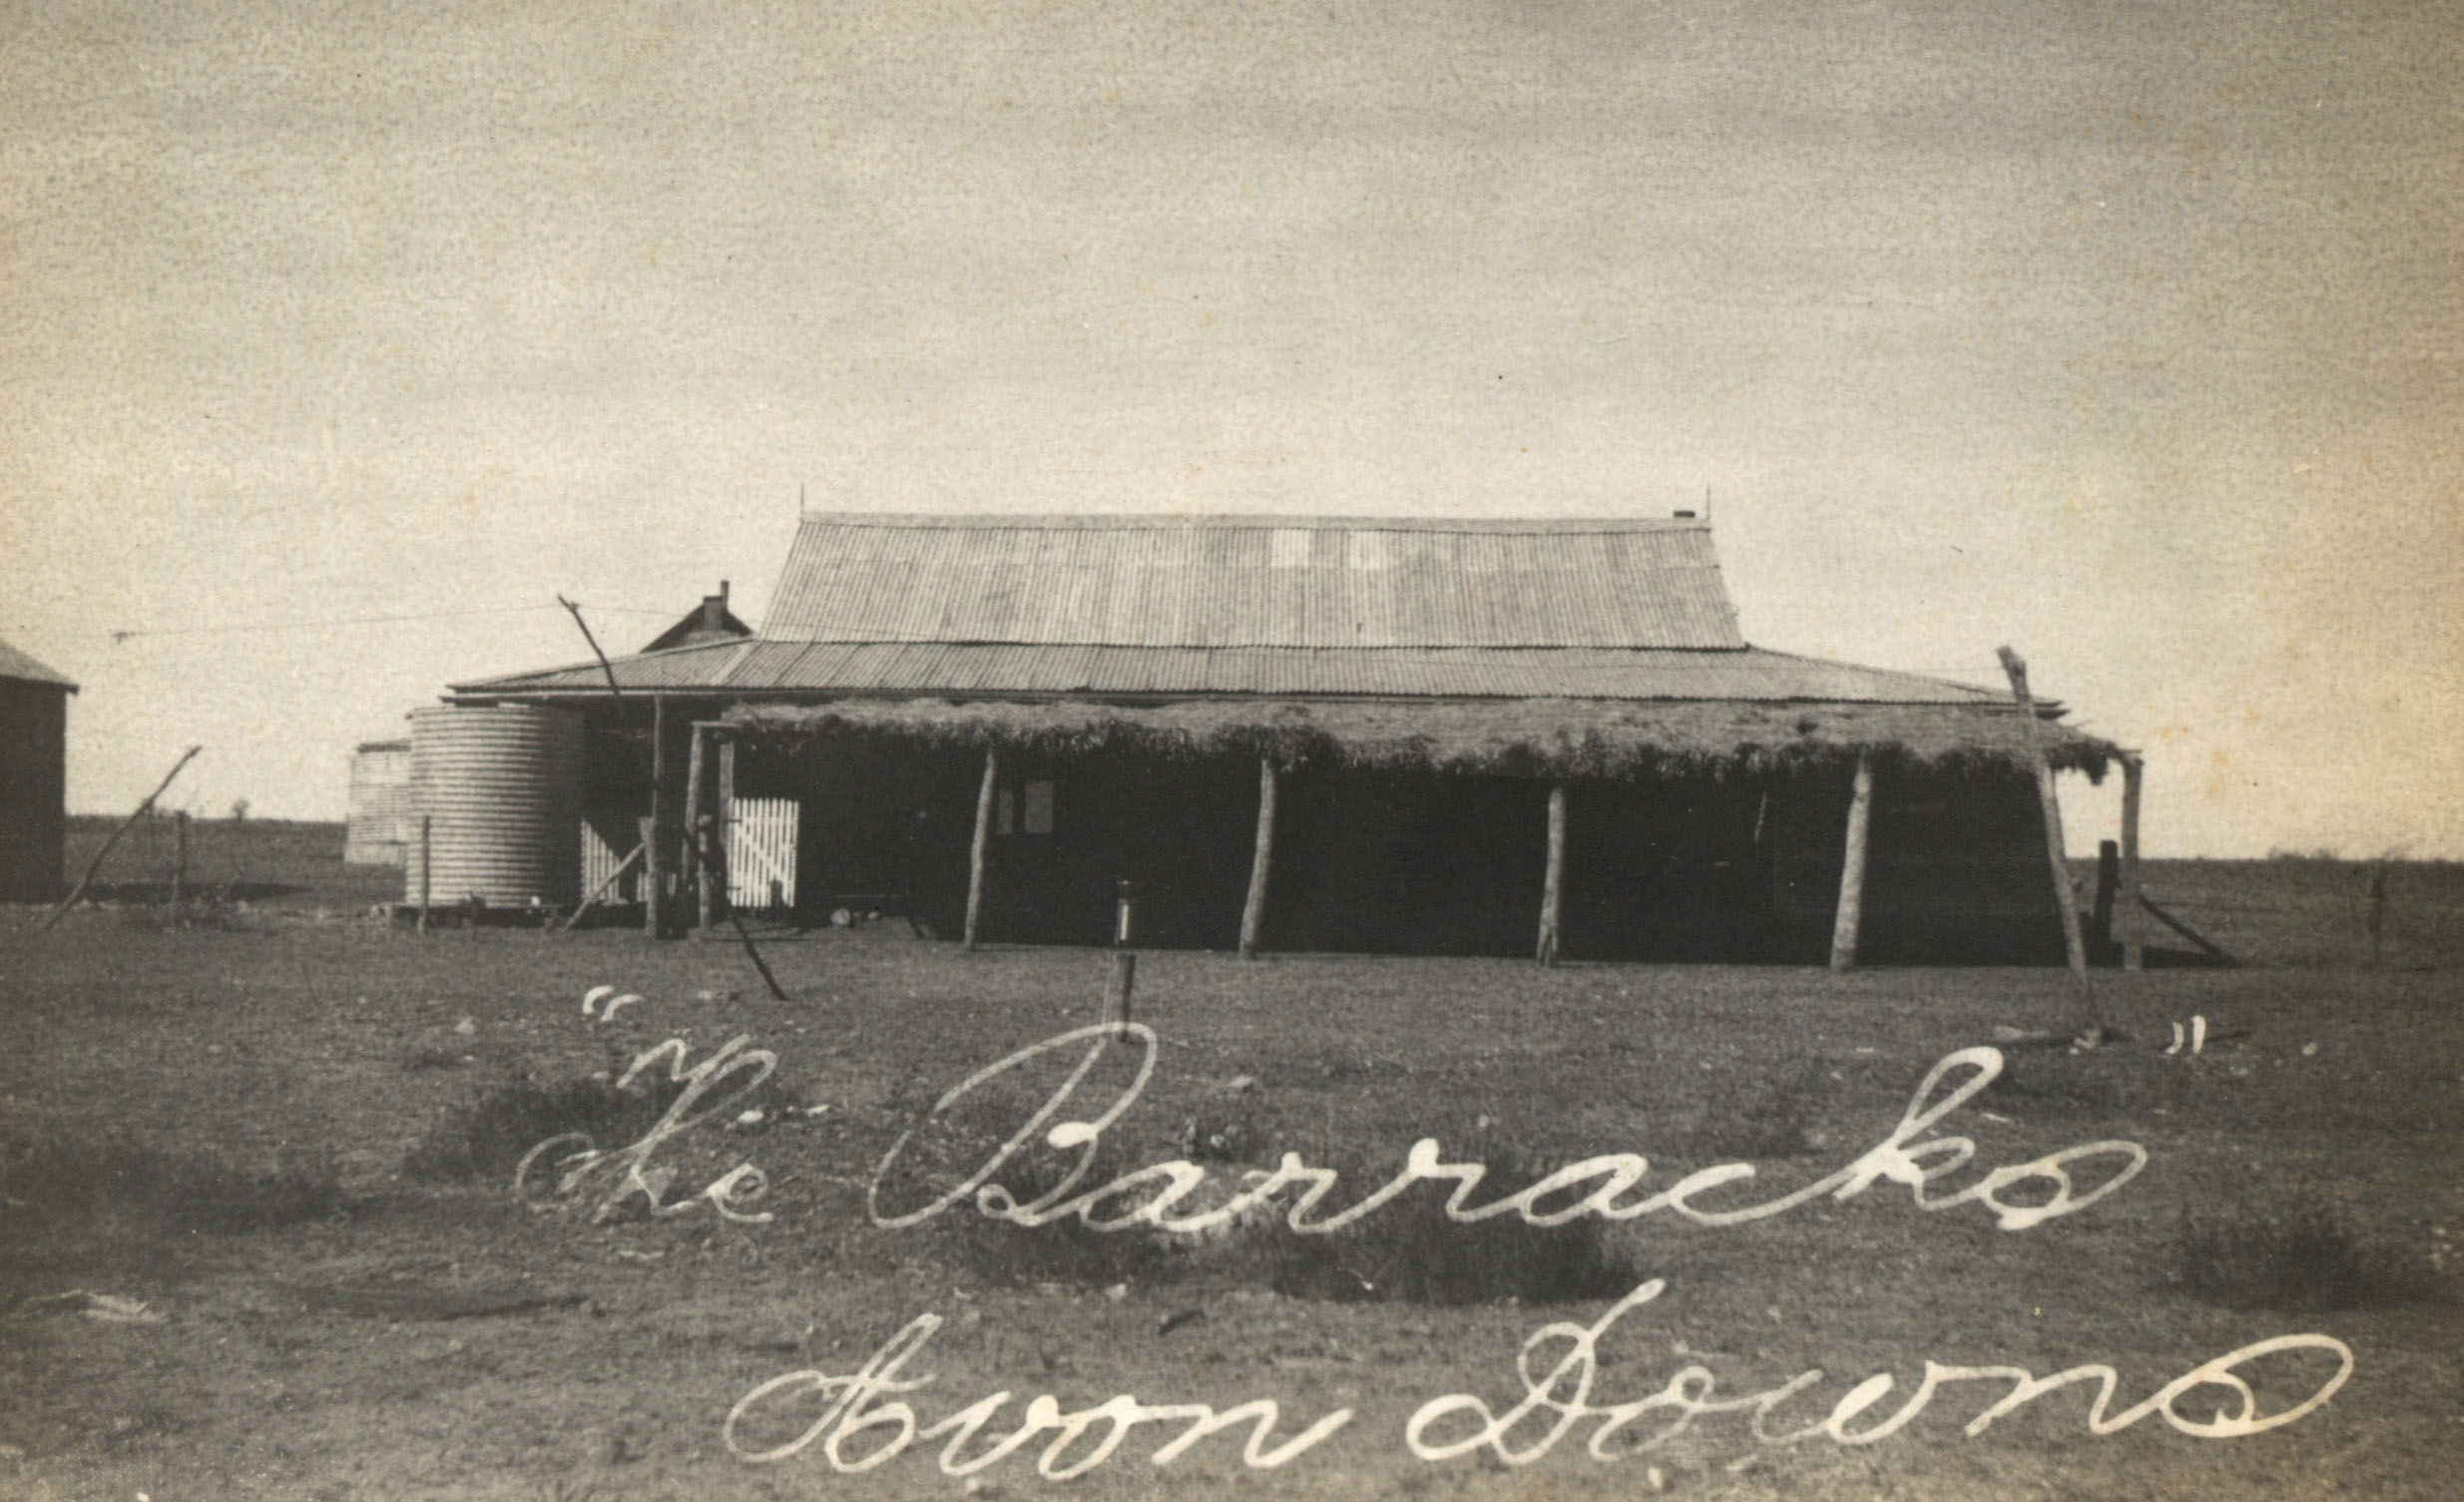 The Barracks, Avon Downs Station, Northern Territory, c. 1910 (Z241-211). 